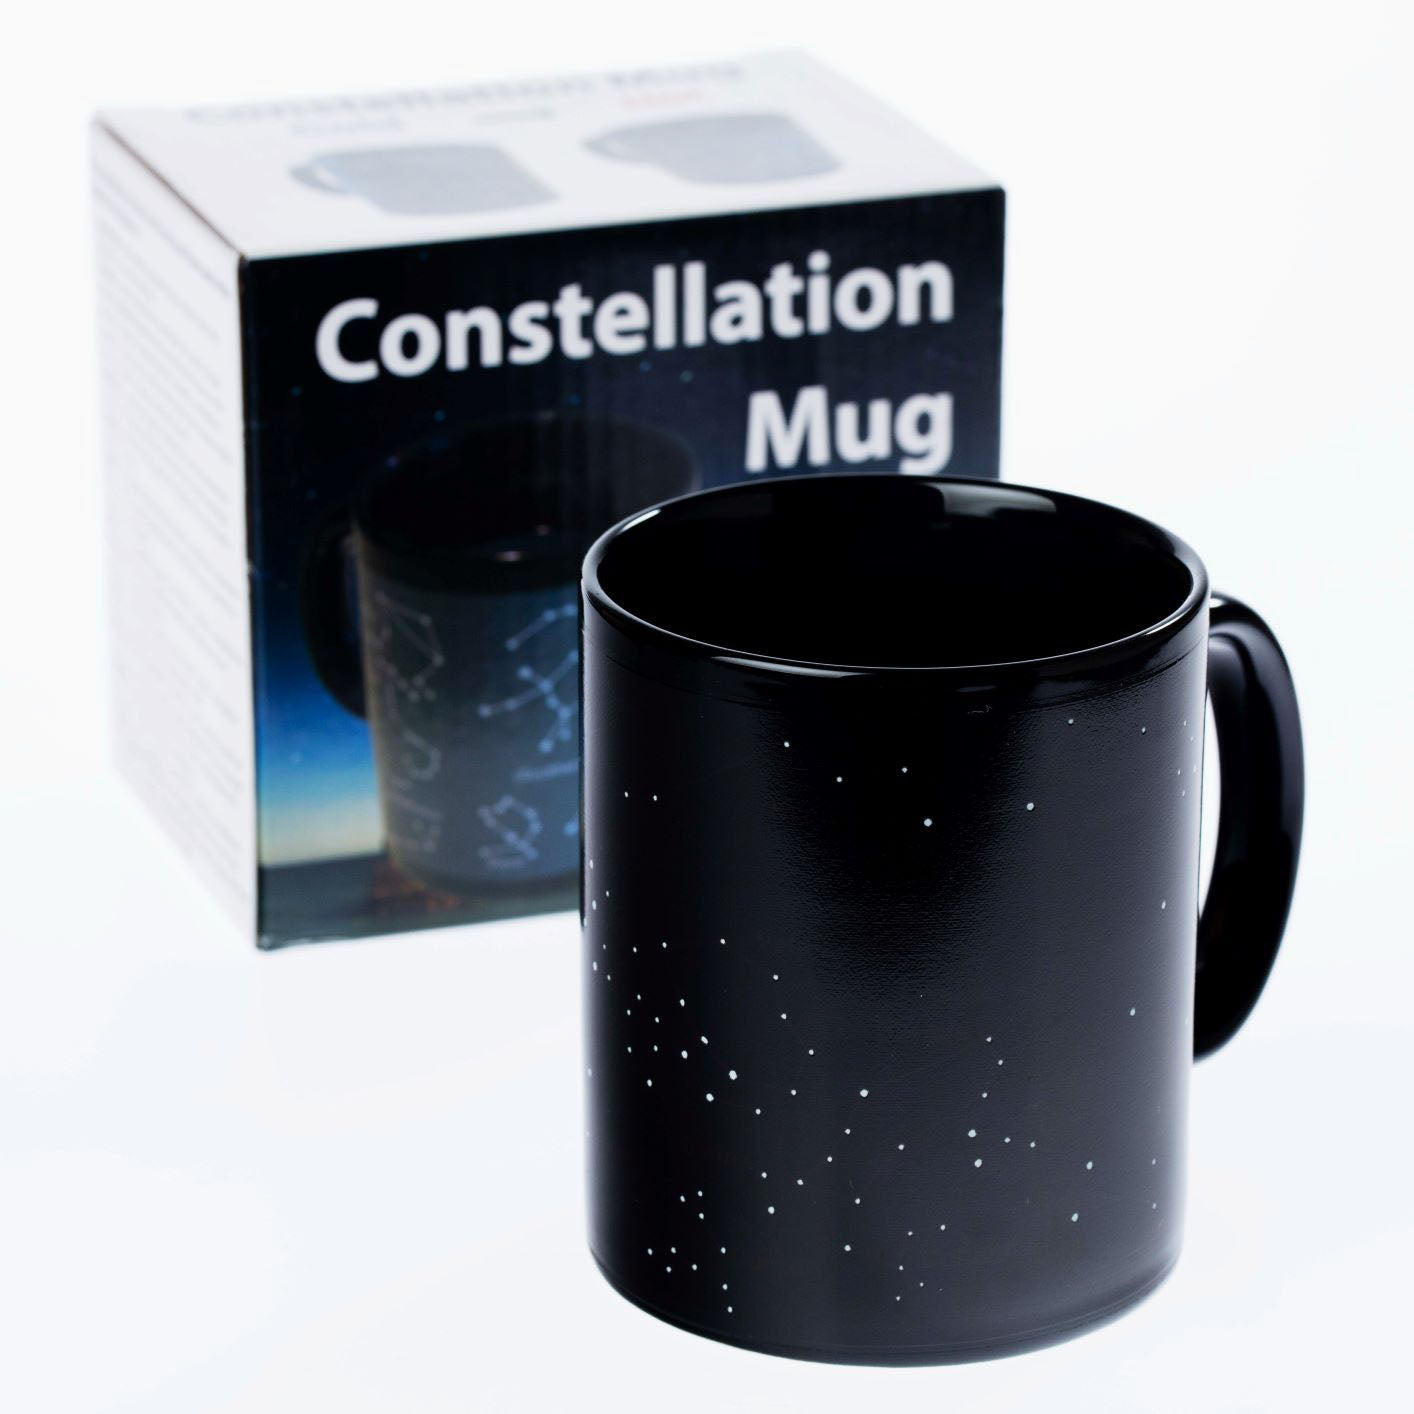 ConstellationMug2.jpg